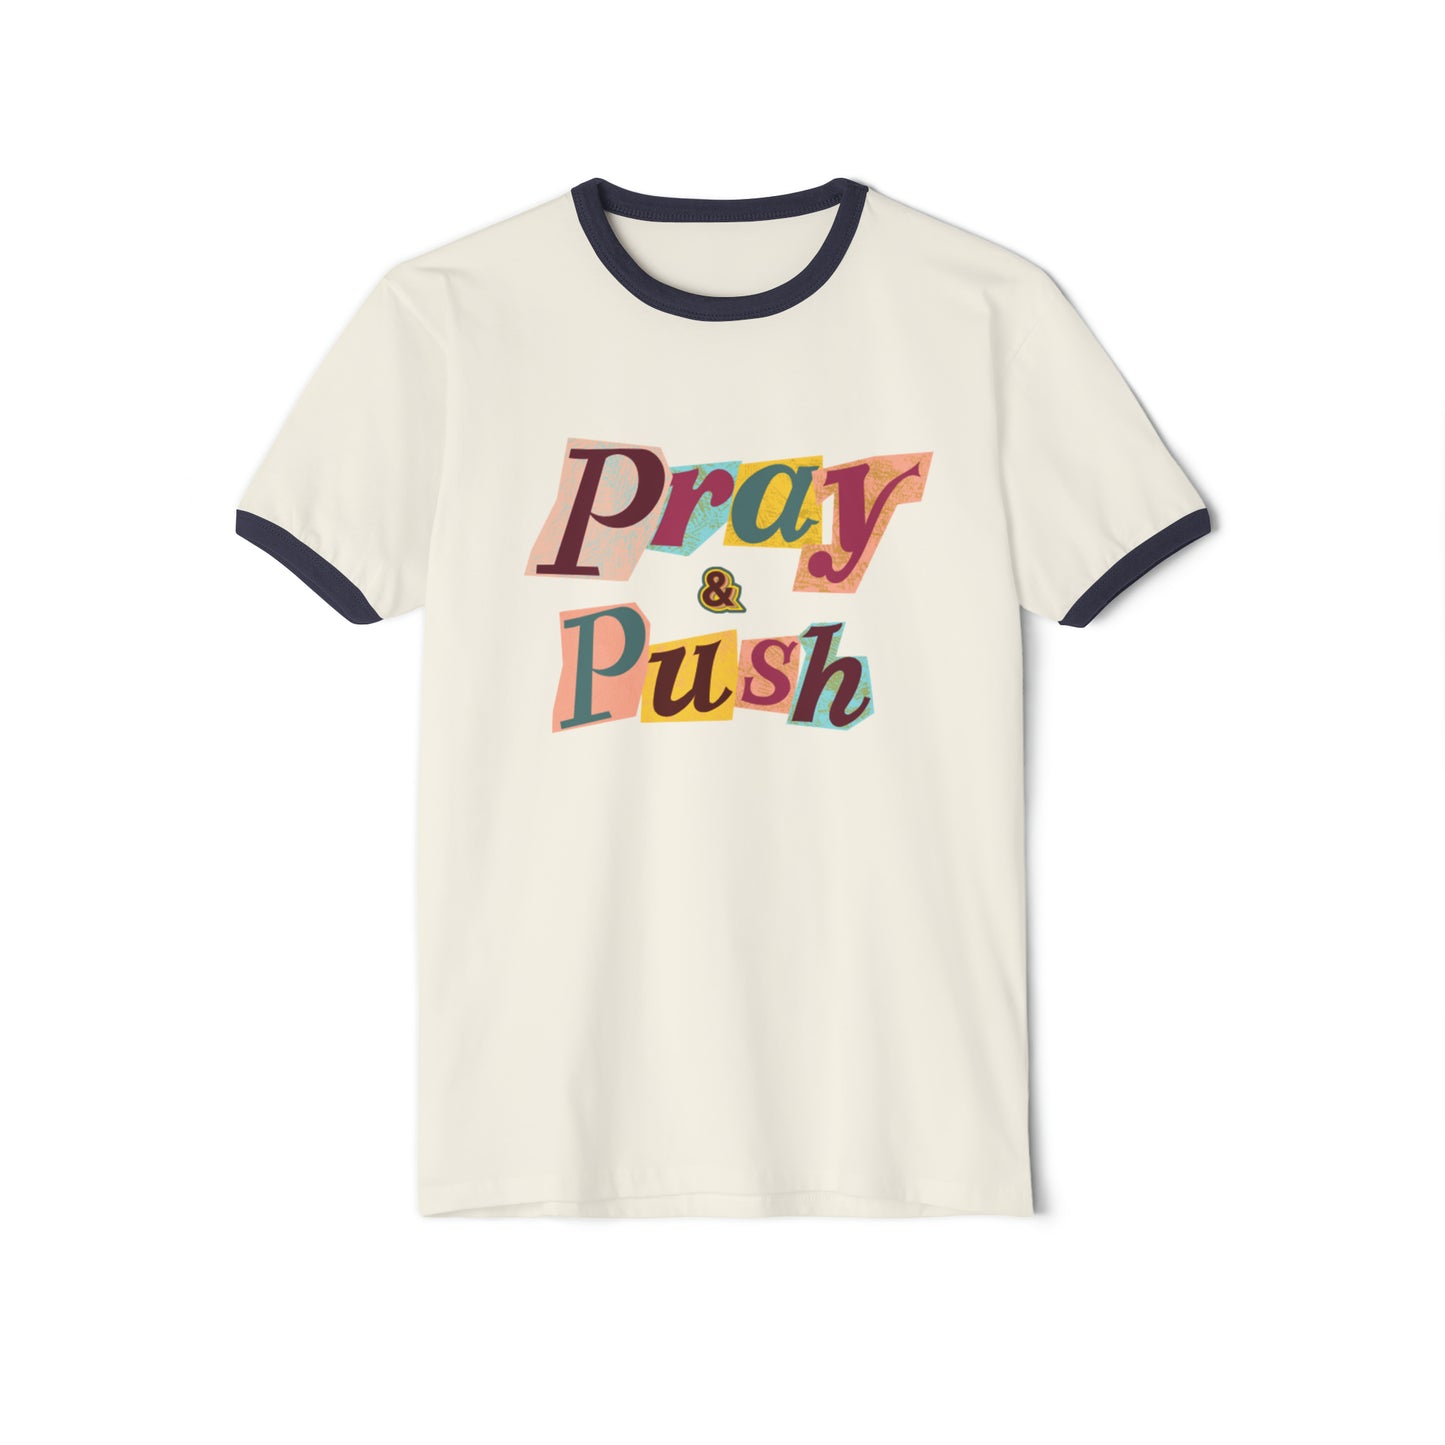 Pray & Push Cotton Ringer T-Shirt